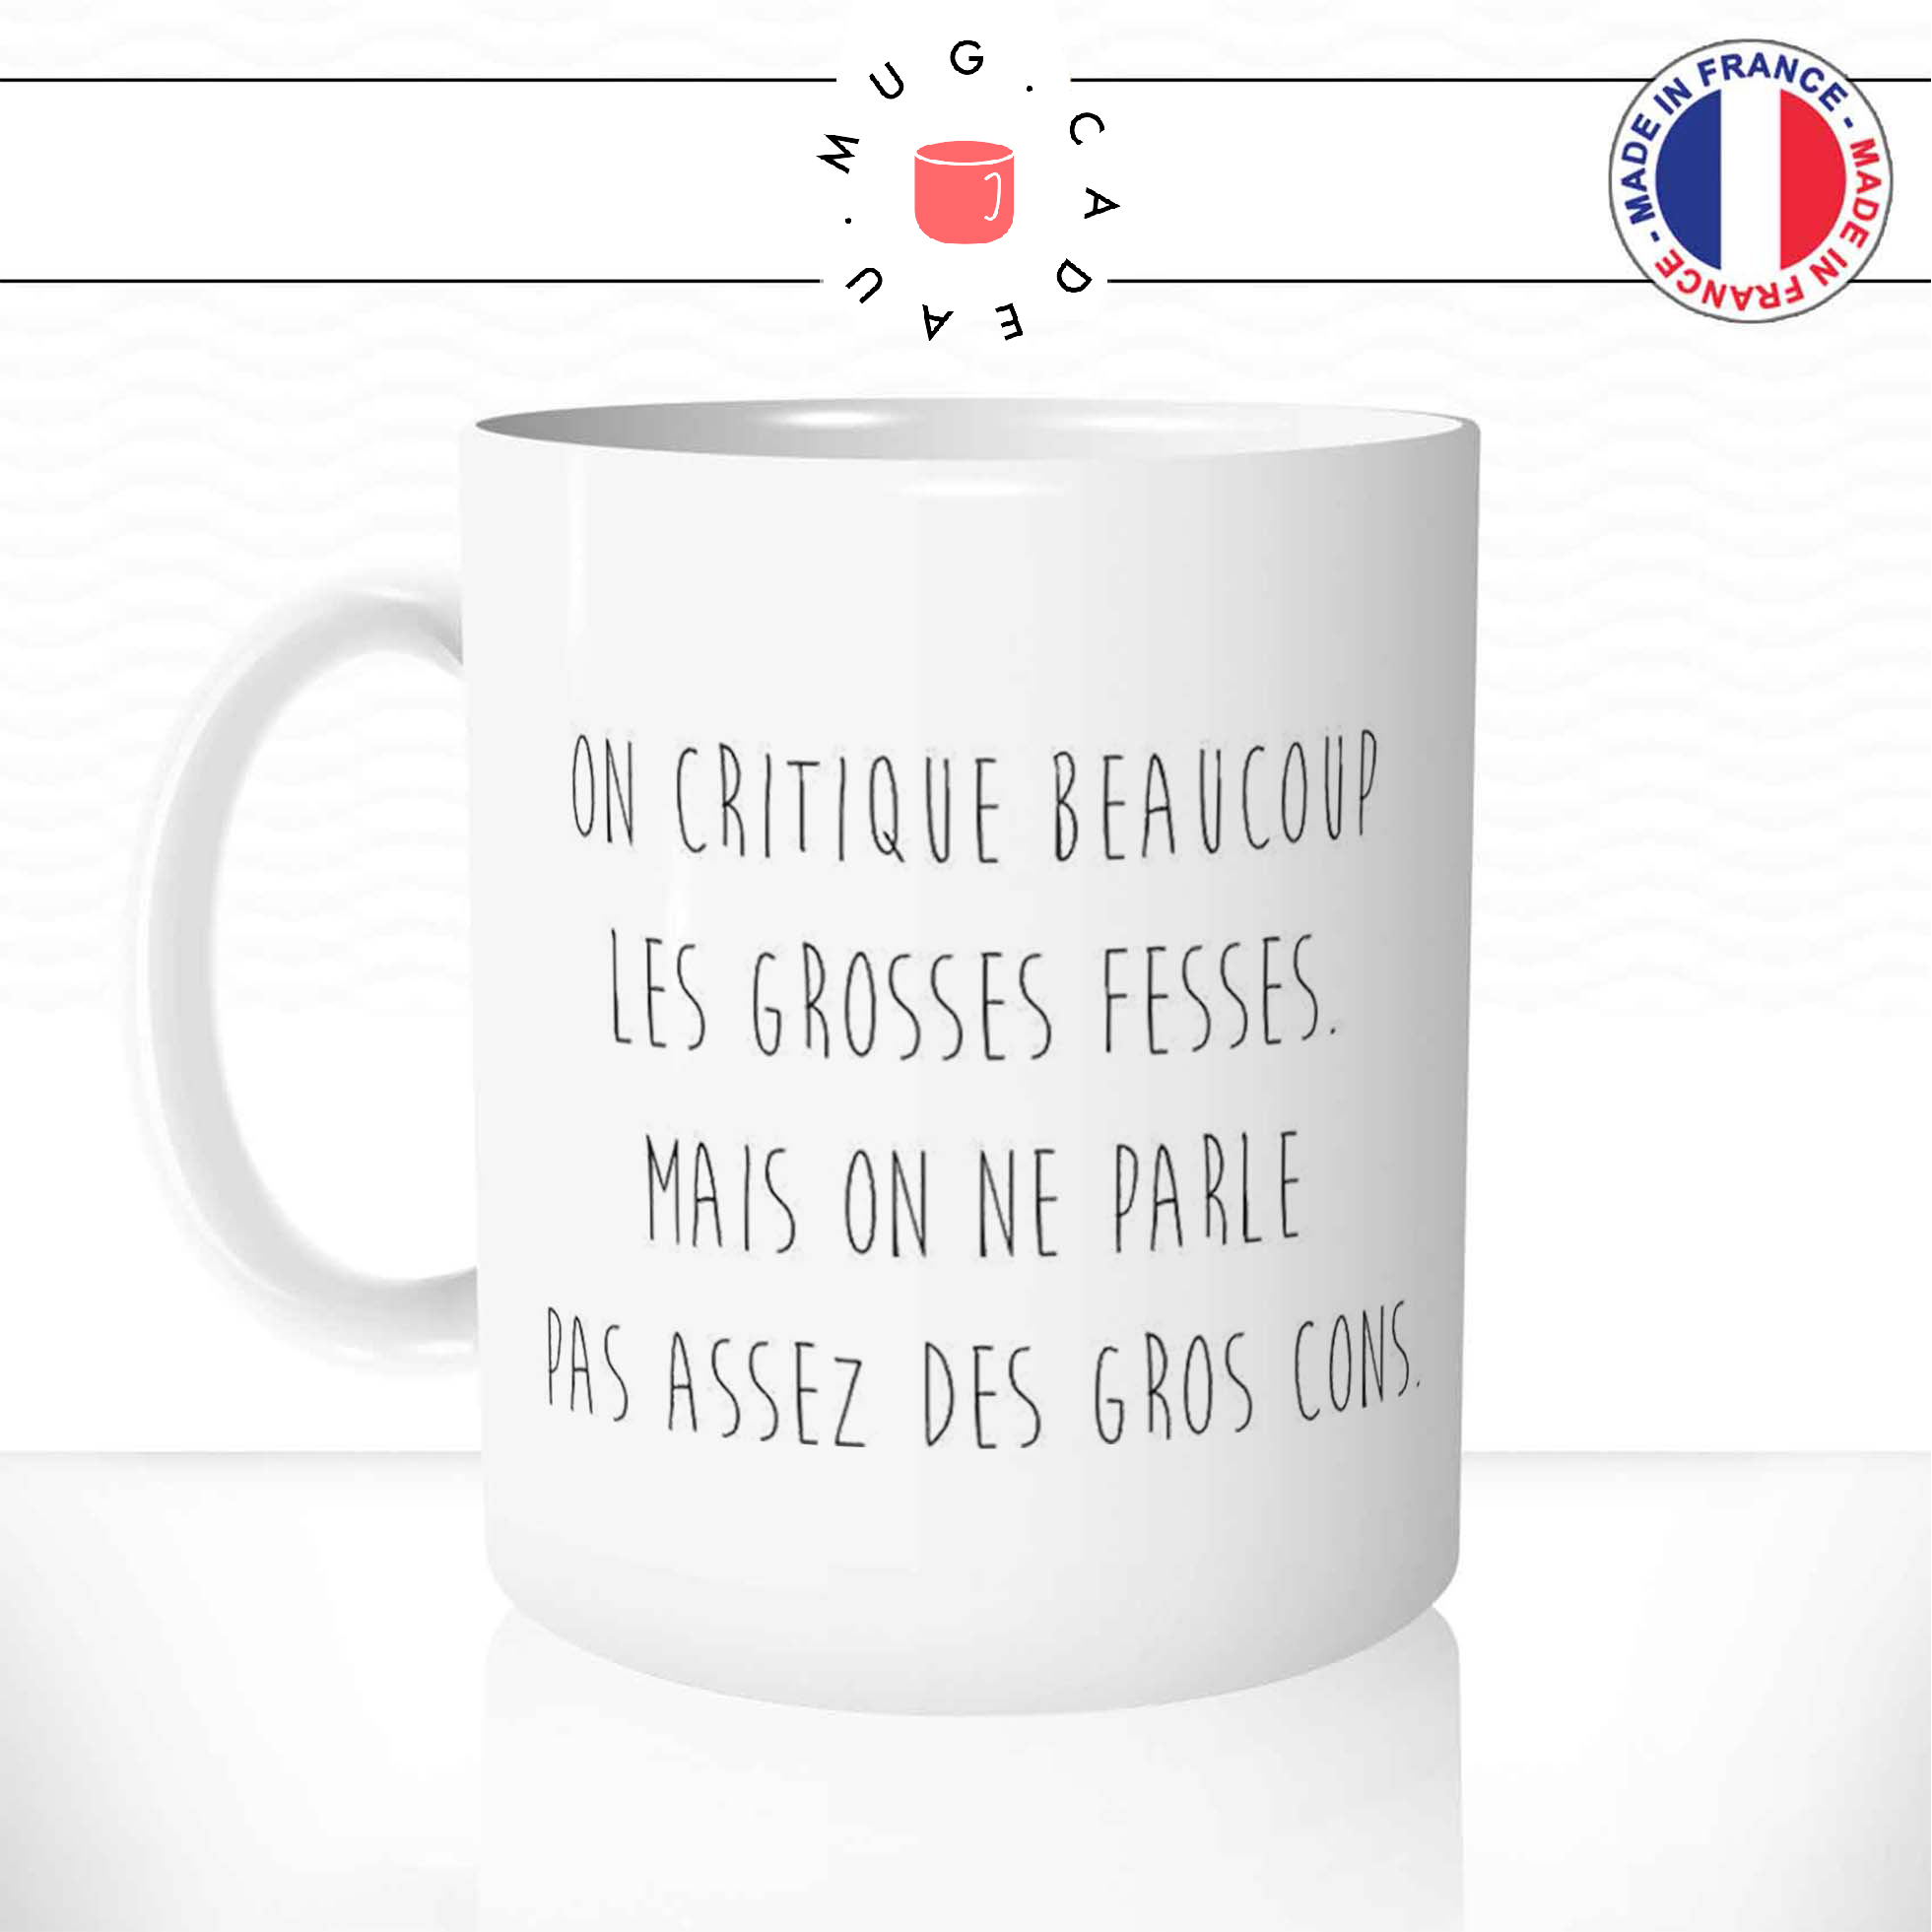 mug-tasse-ref2-citation-drole-humour-humoristique-phrase-grosses-fesses-femme-cafe-the-mugs-tasses-personnalise-anse-gauche